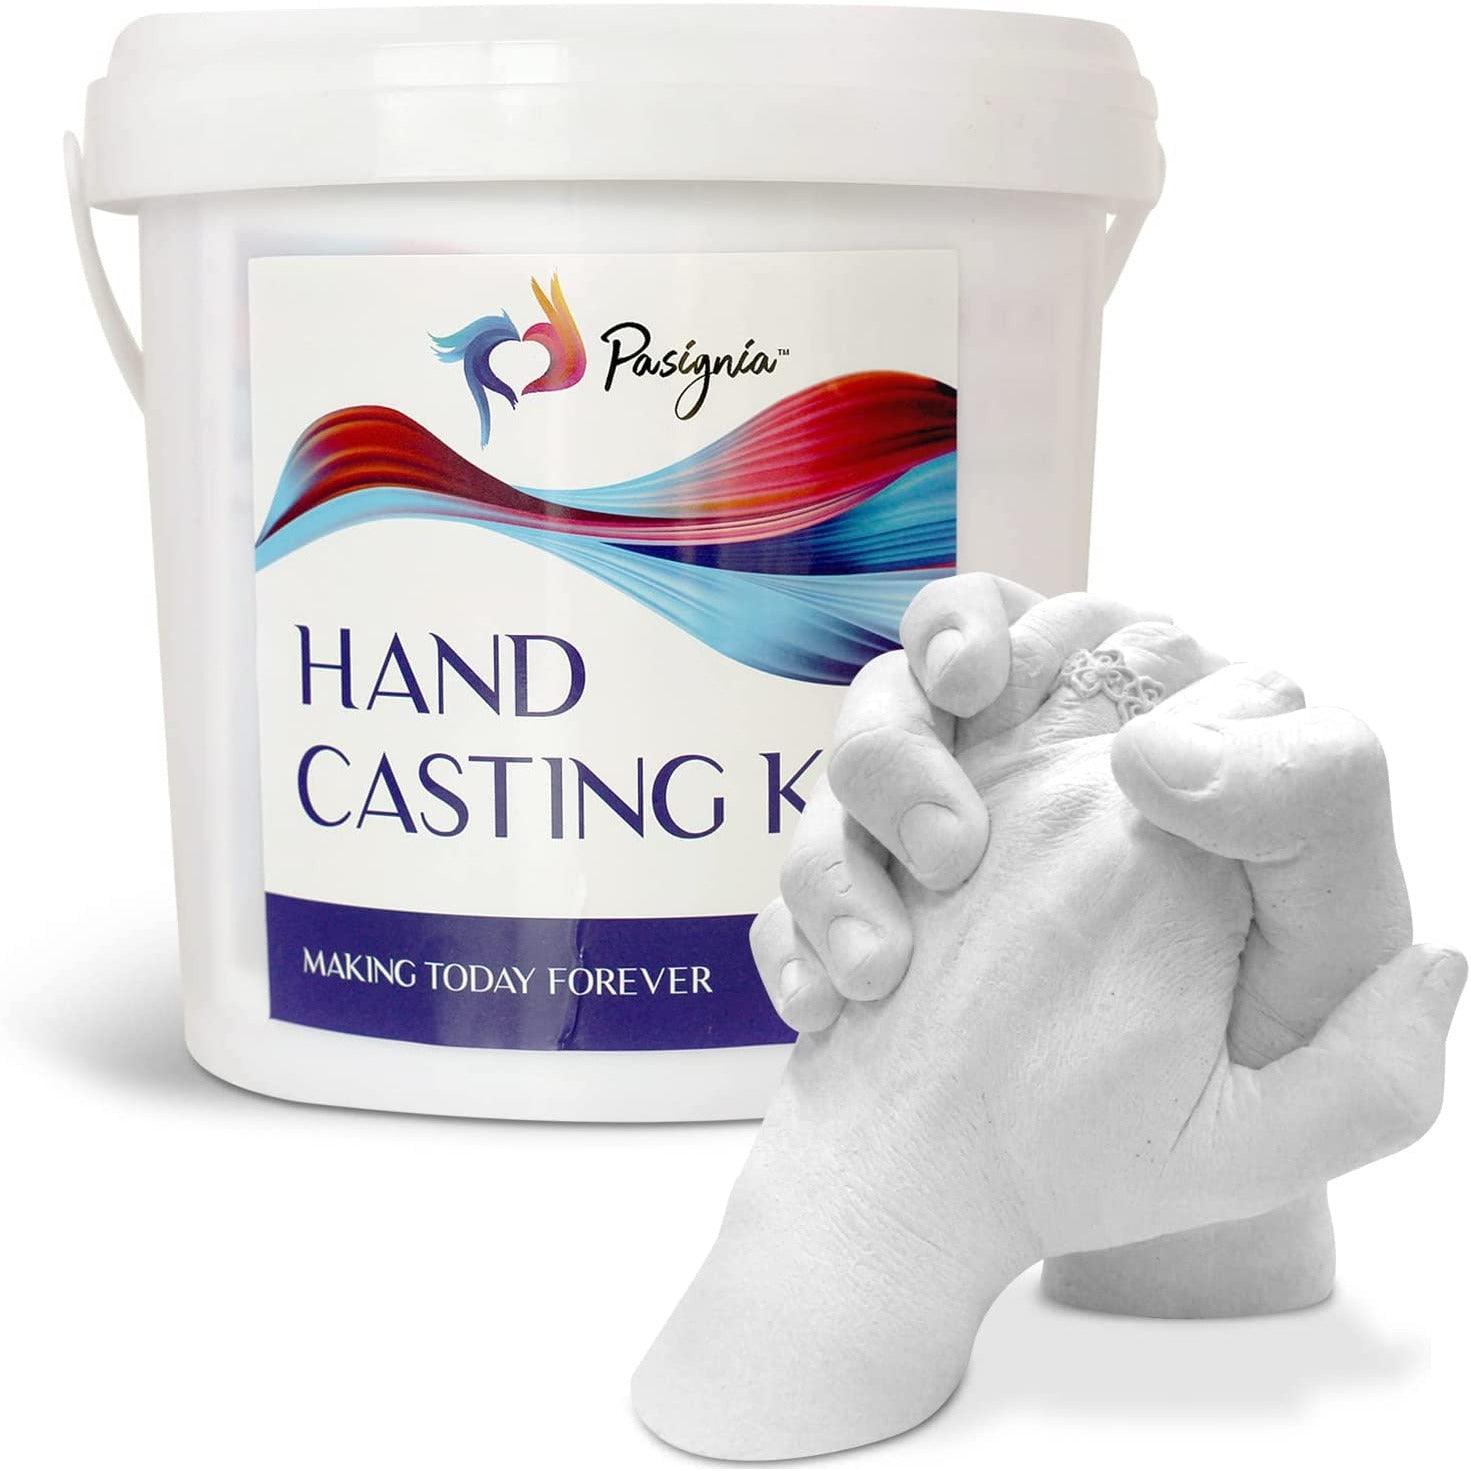 Hand Casting